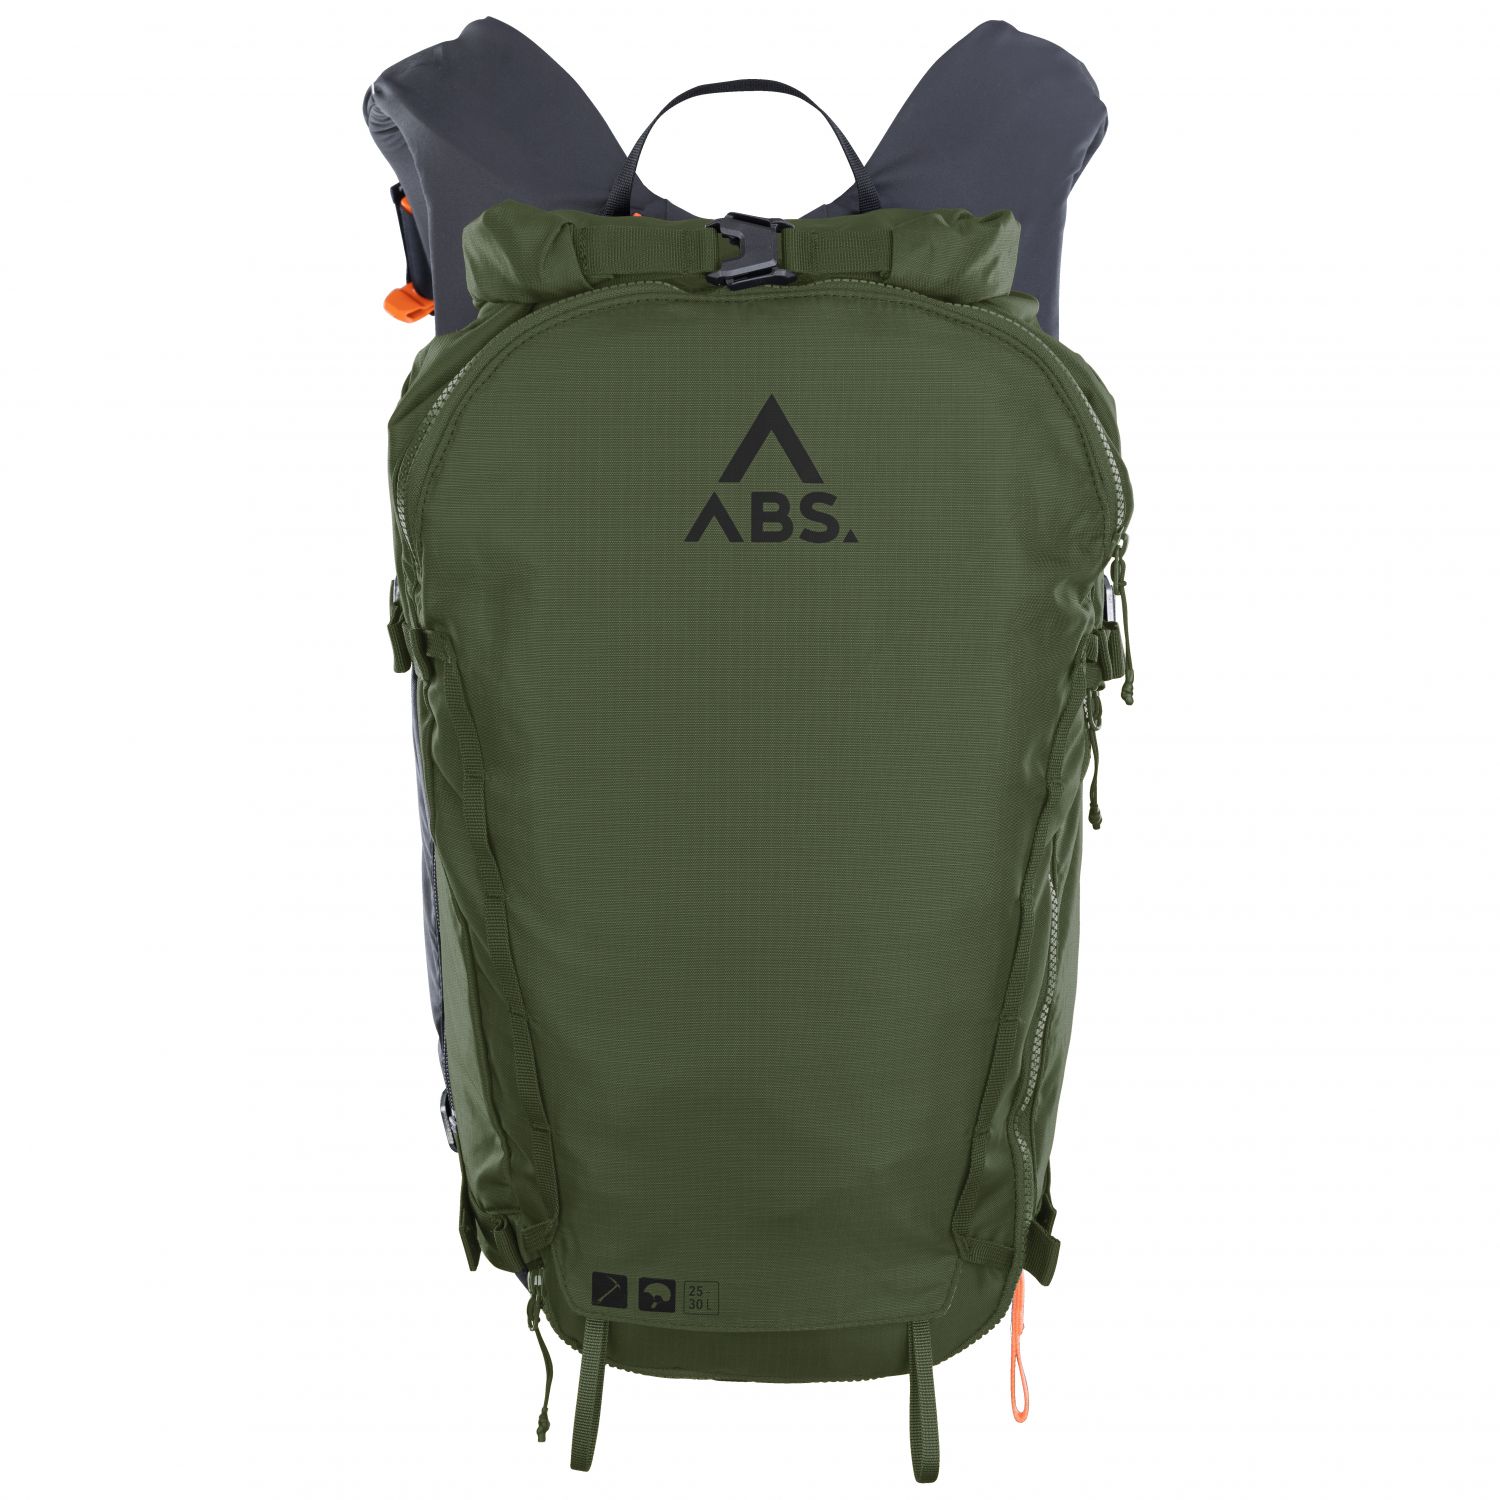 ABS A.Light E, 25-30L, Lavineryggsekk, Khaki